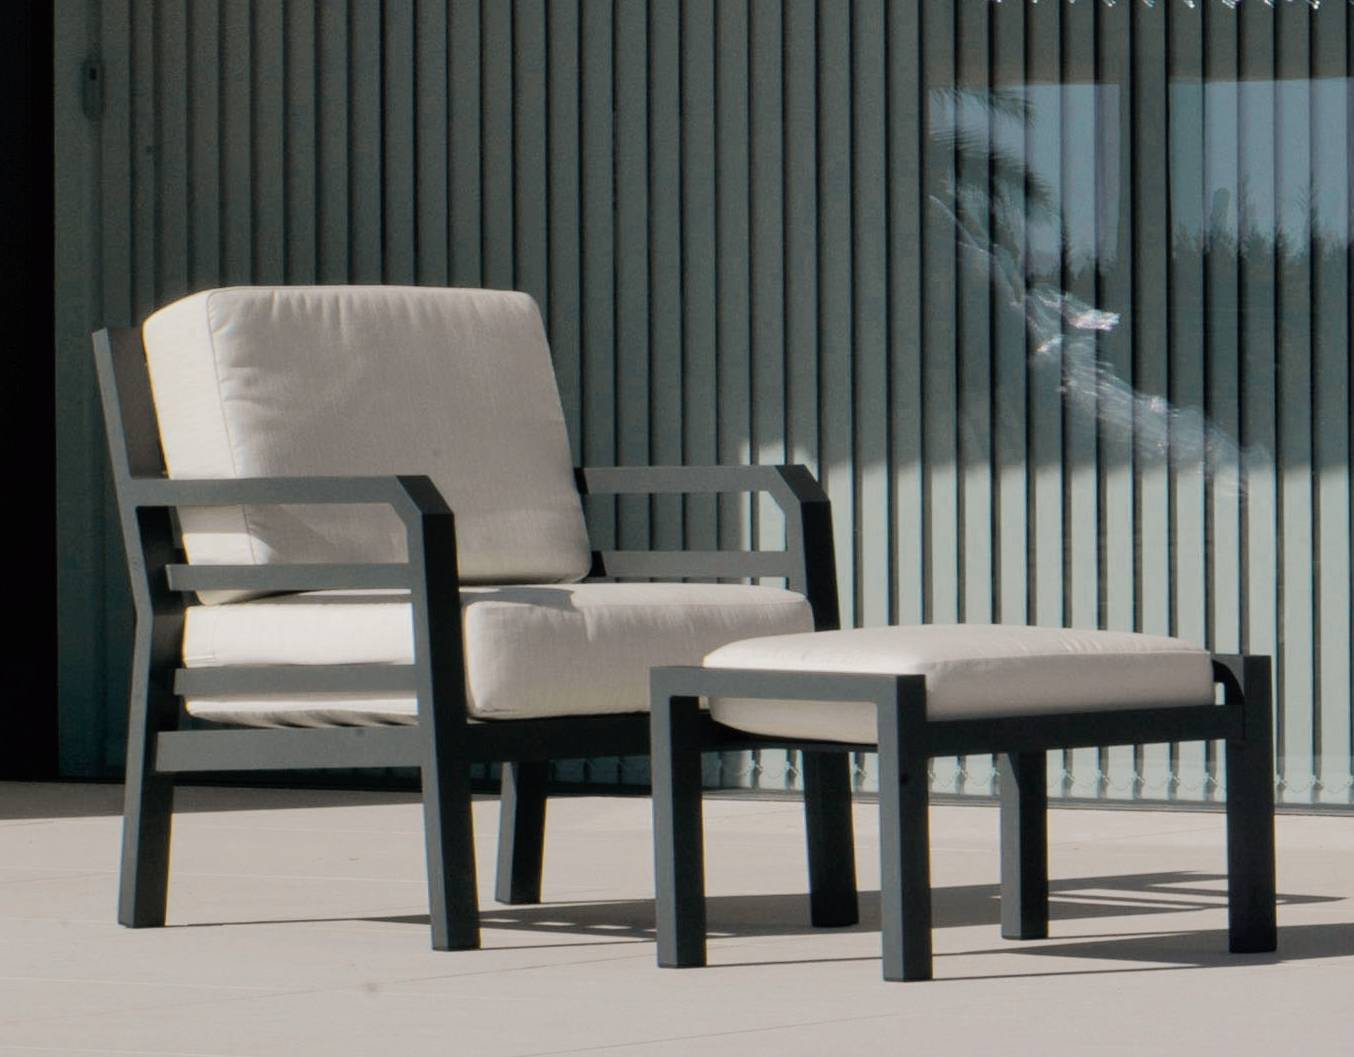 Set Aluminio Luxe Camelia-8 - Conjunto lujo de aluminio: 1 sofá de 3 plazas + 2 sillones + 1 mesa de centro. Disponible en color blanco, antracita, champagne, plata o marrón.